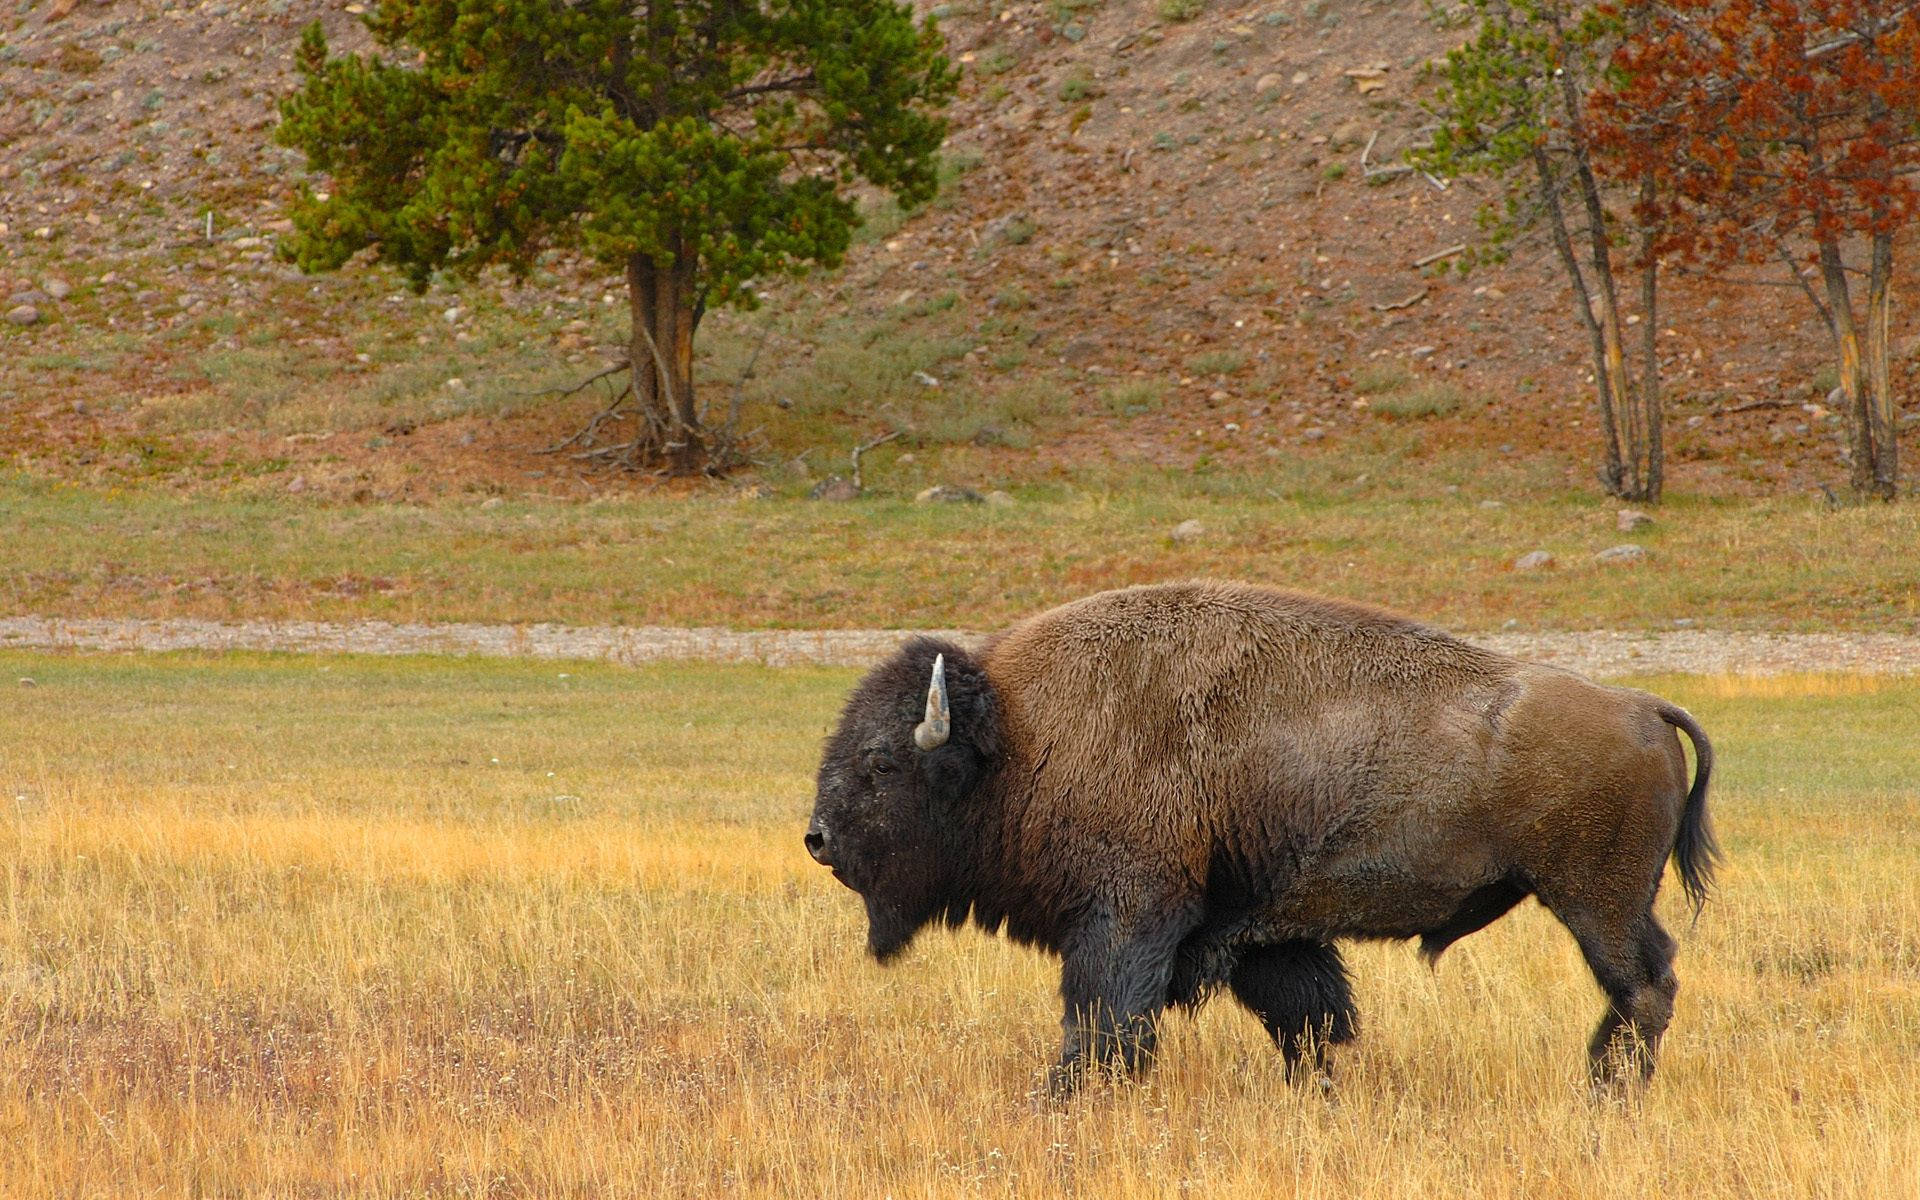 Walking Odd-looking Buffalo Background